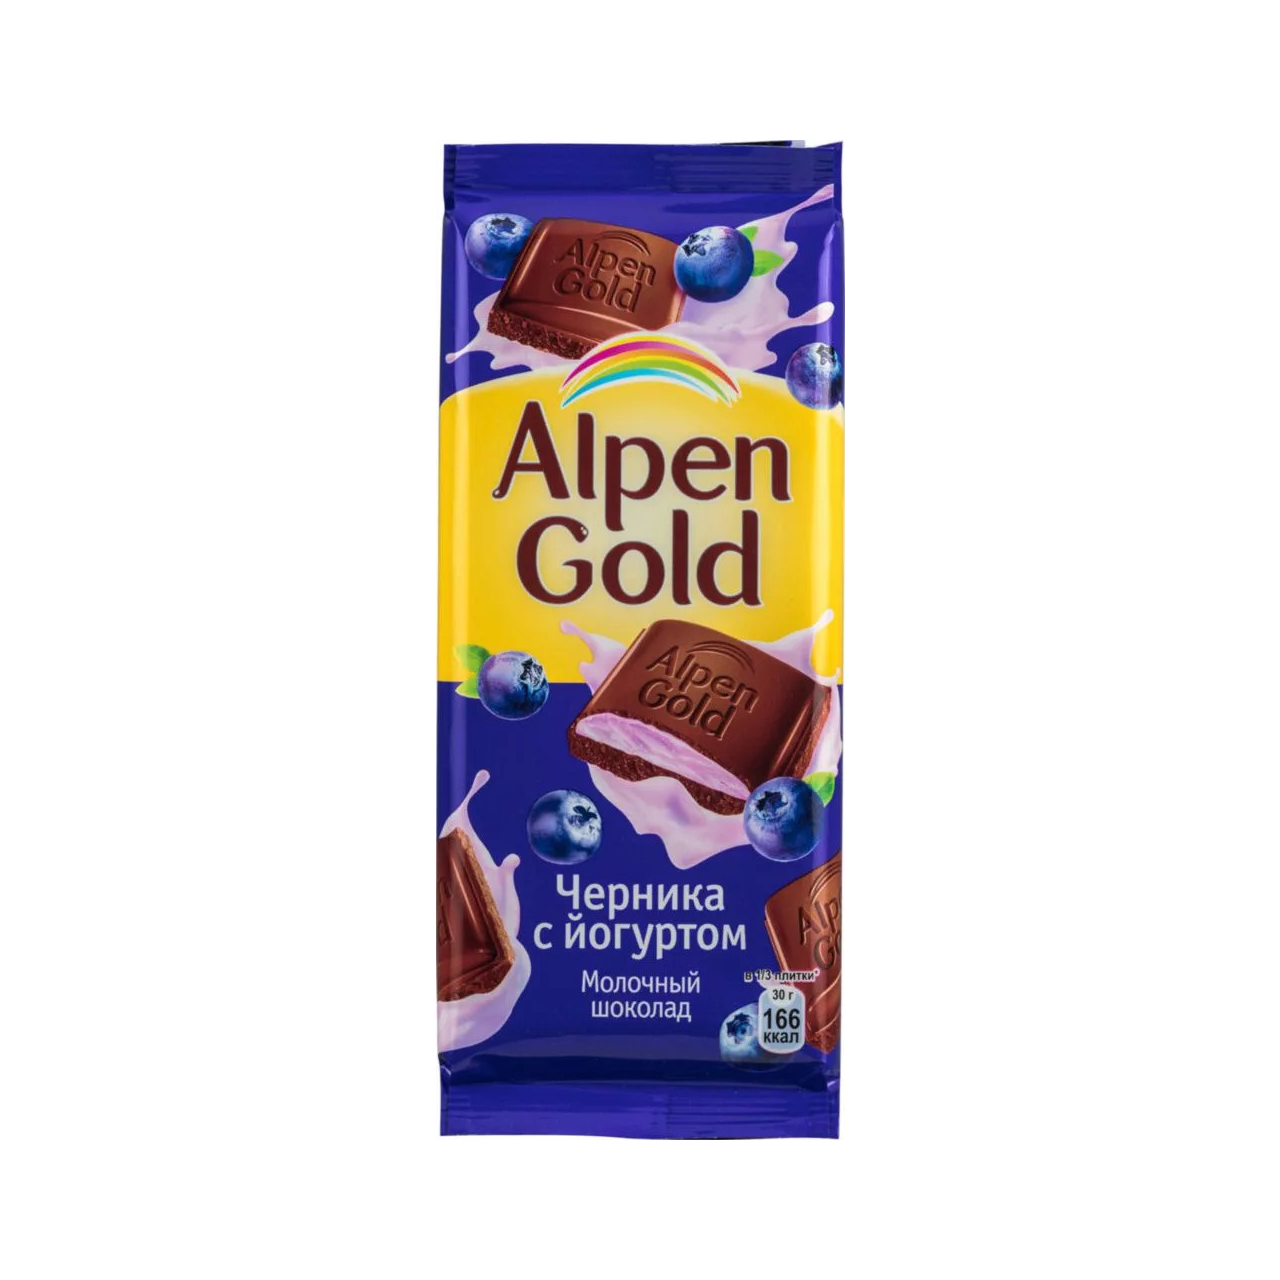 Шоколад Альпен Голд 80 г черника/йогурт